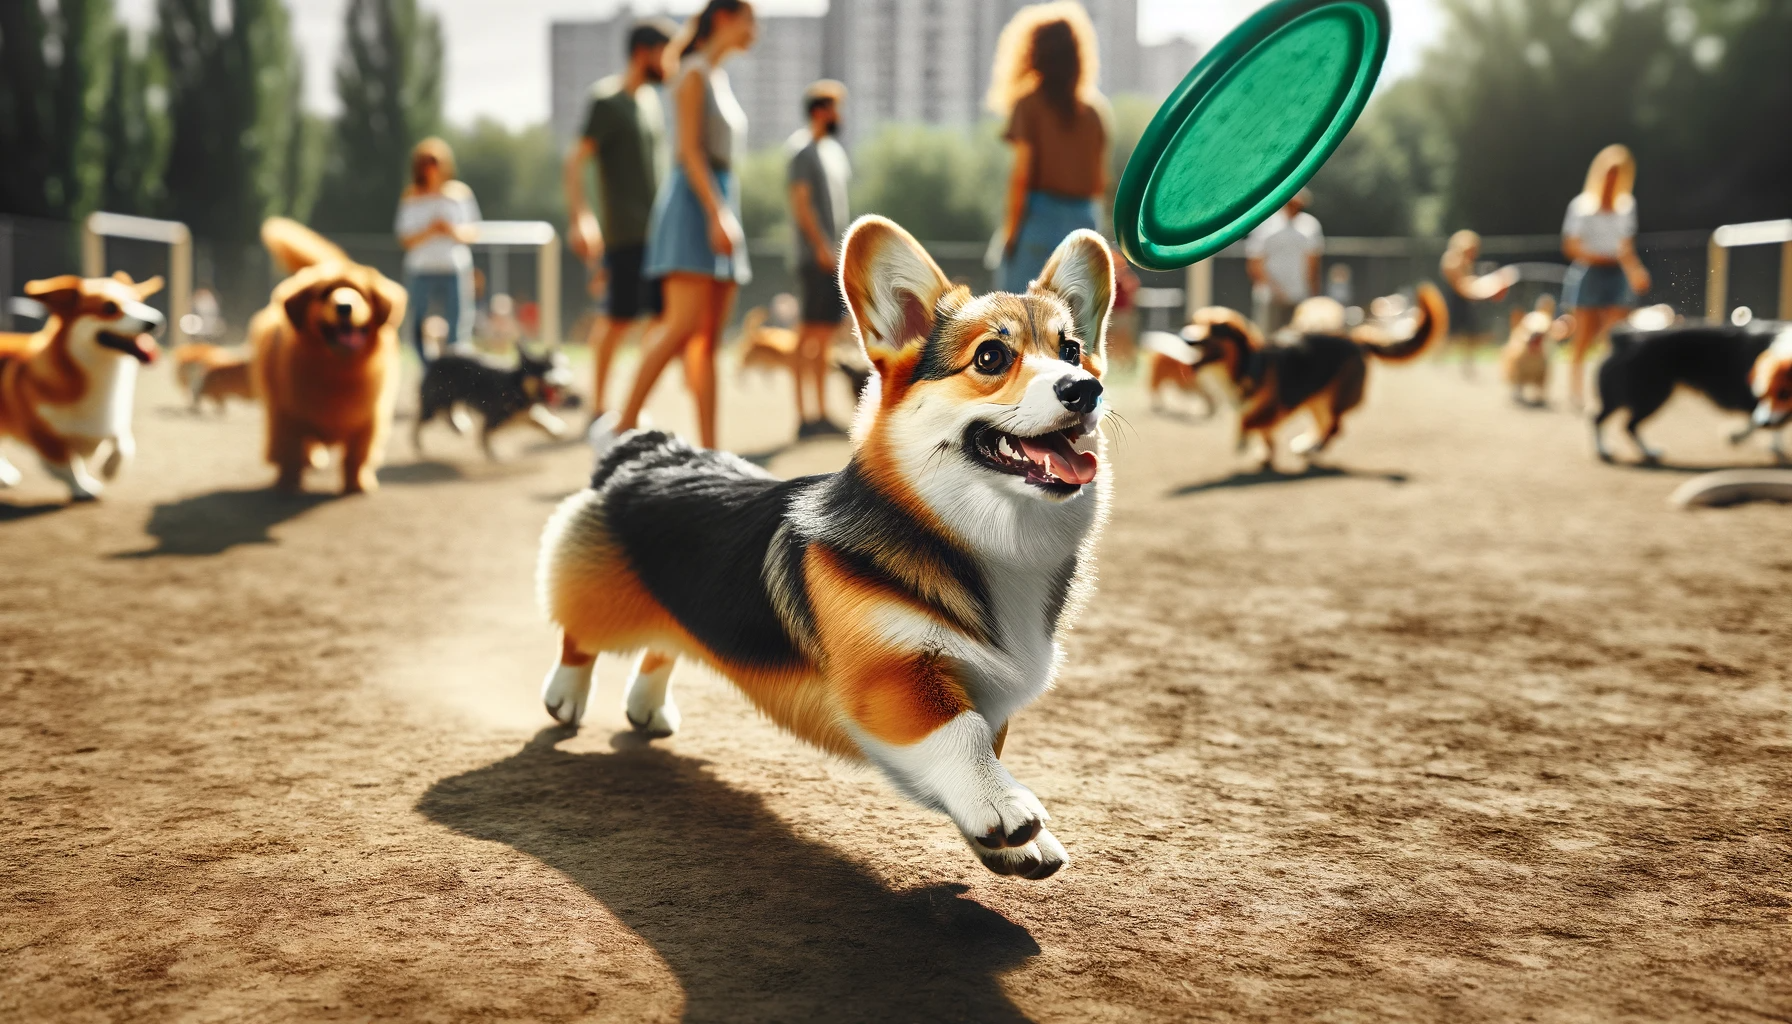 Corgidor playing fetch energetically in a dog park